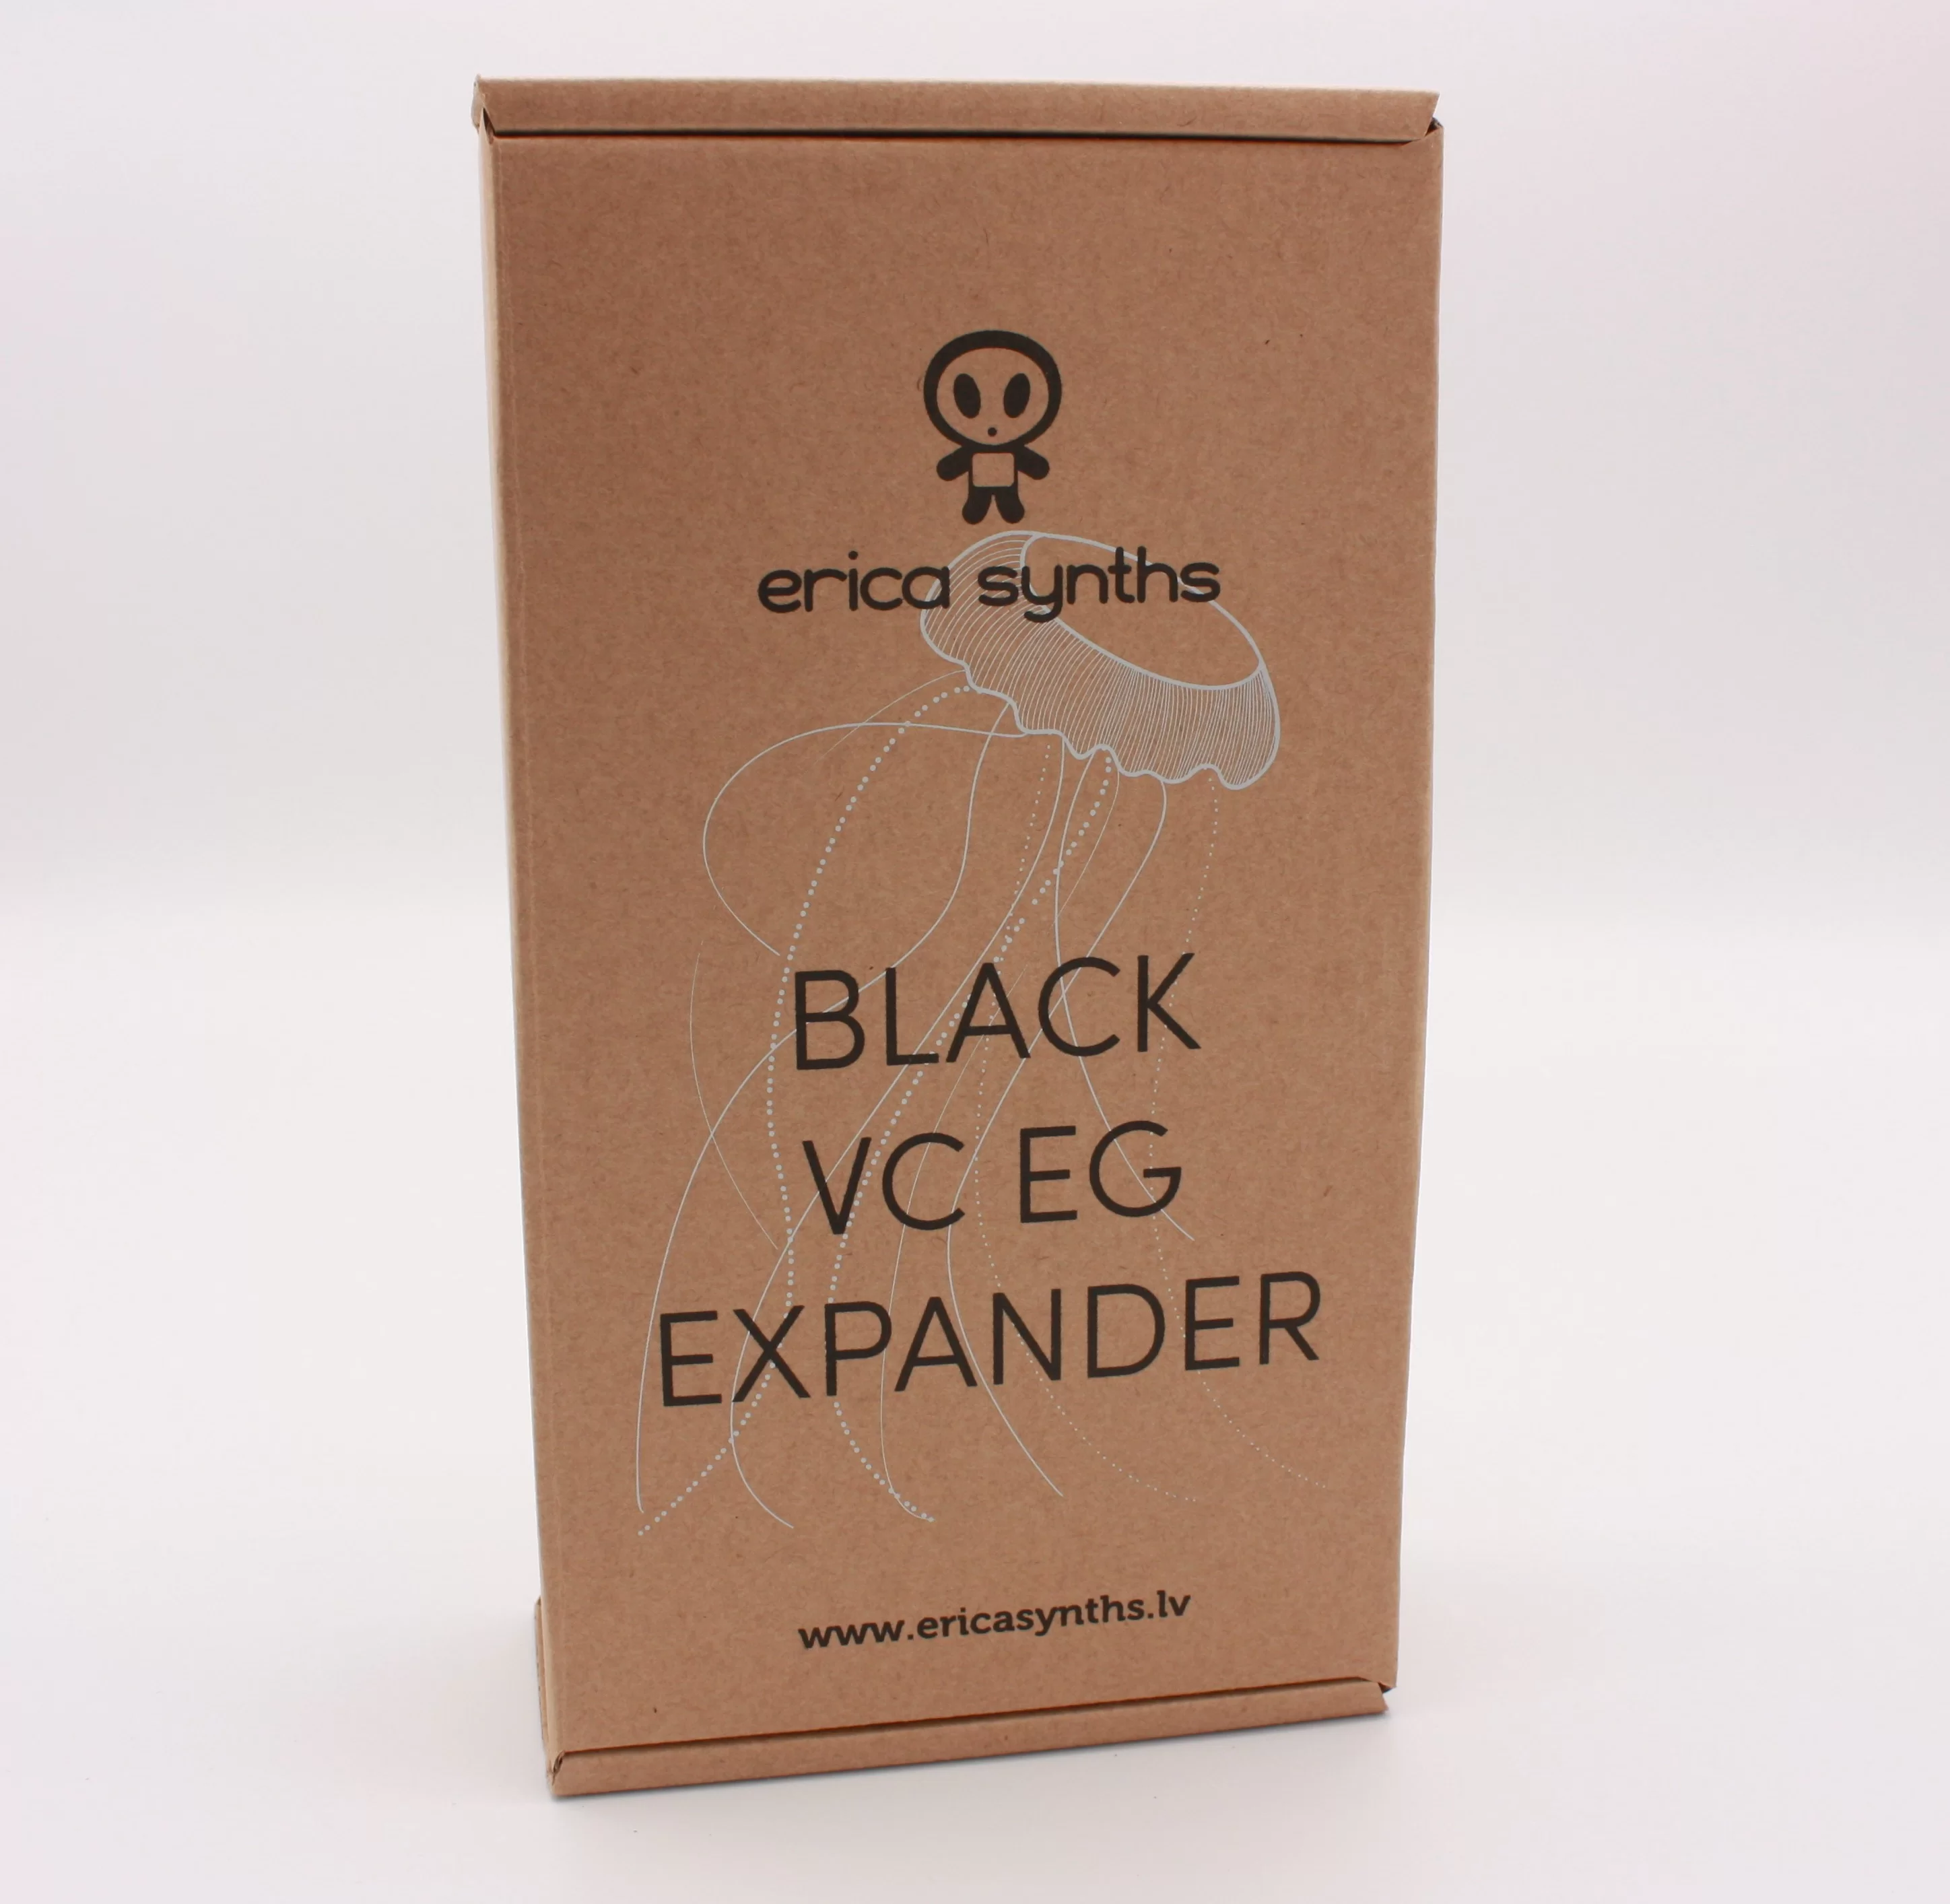 Erica Synth Black VC EG Expander